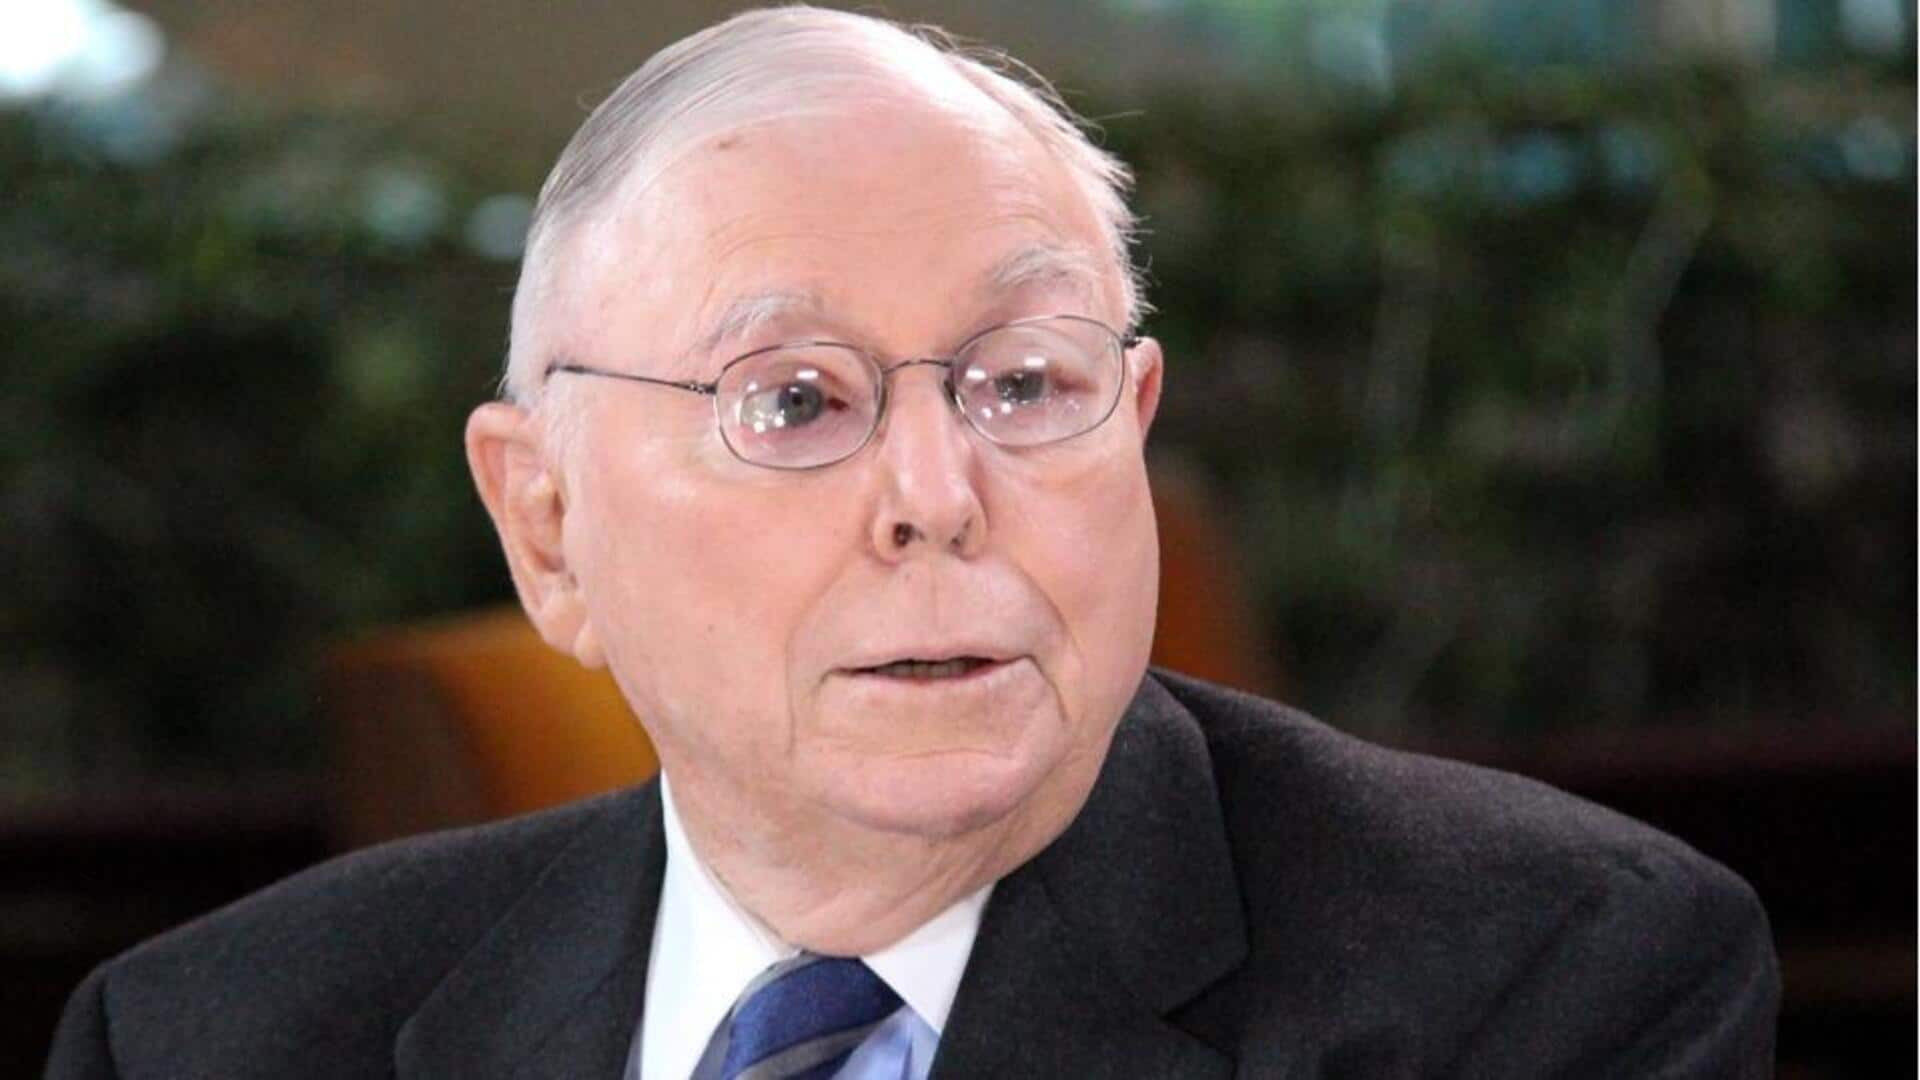 Charlie Munger, Warren Buffett's longtime business partner, dies at 99